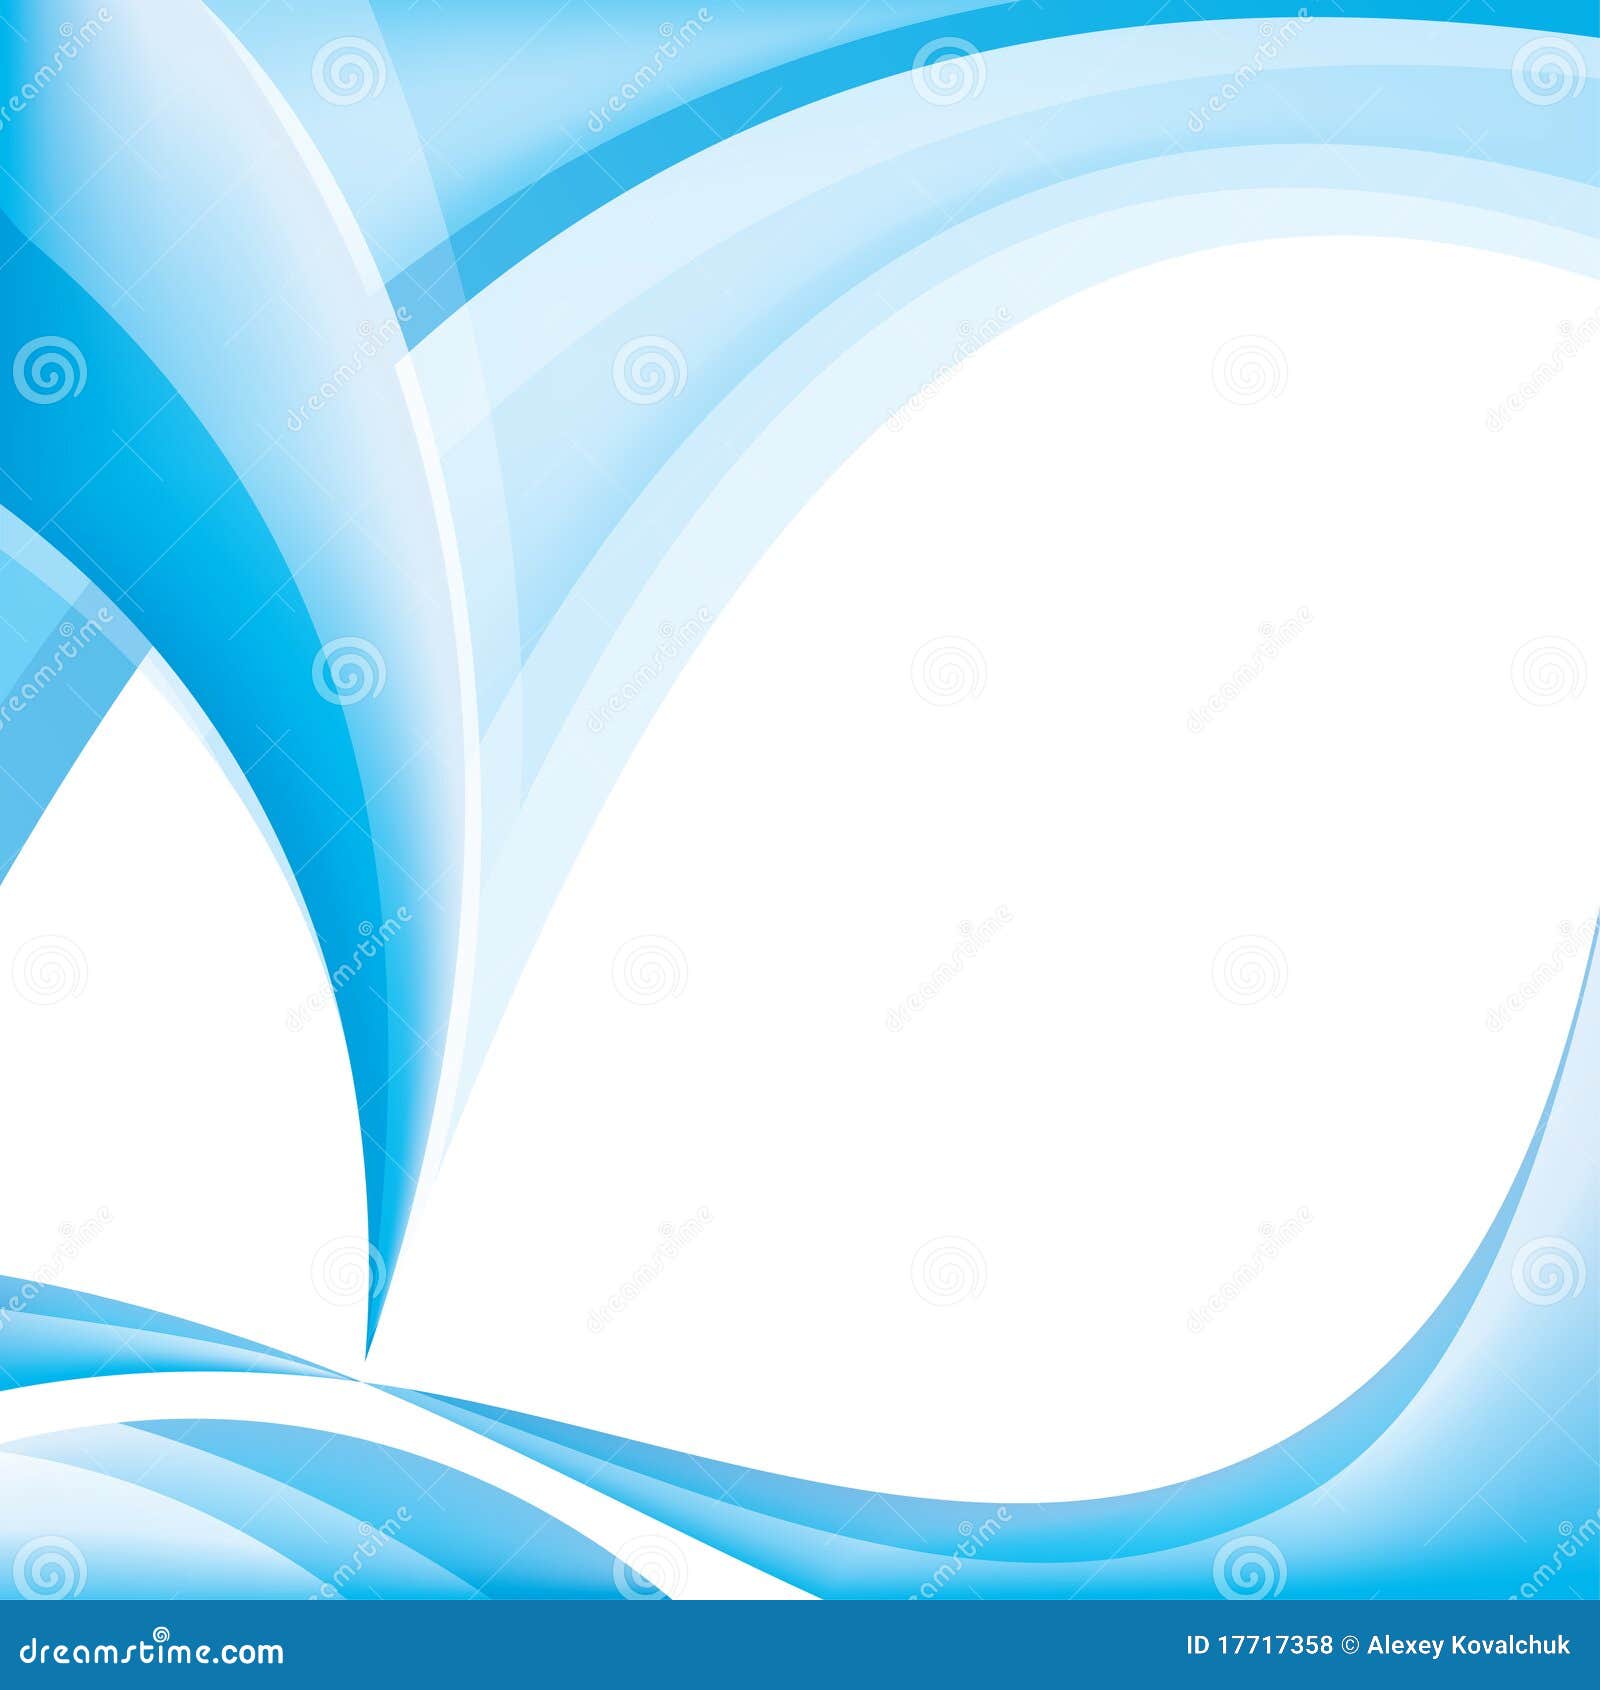 Download 97 Koleksi Background Blue Vector Gratis Terbaru